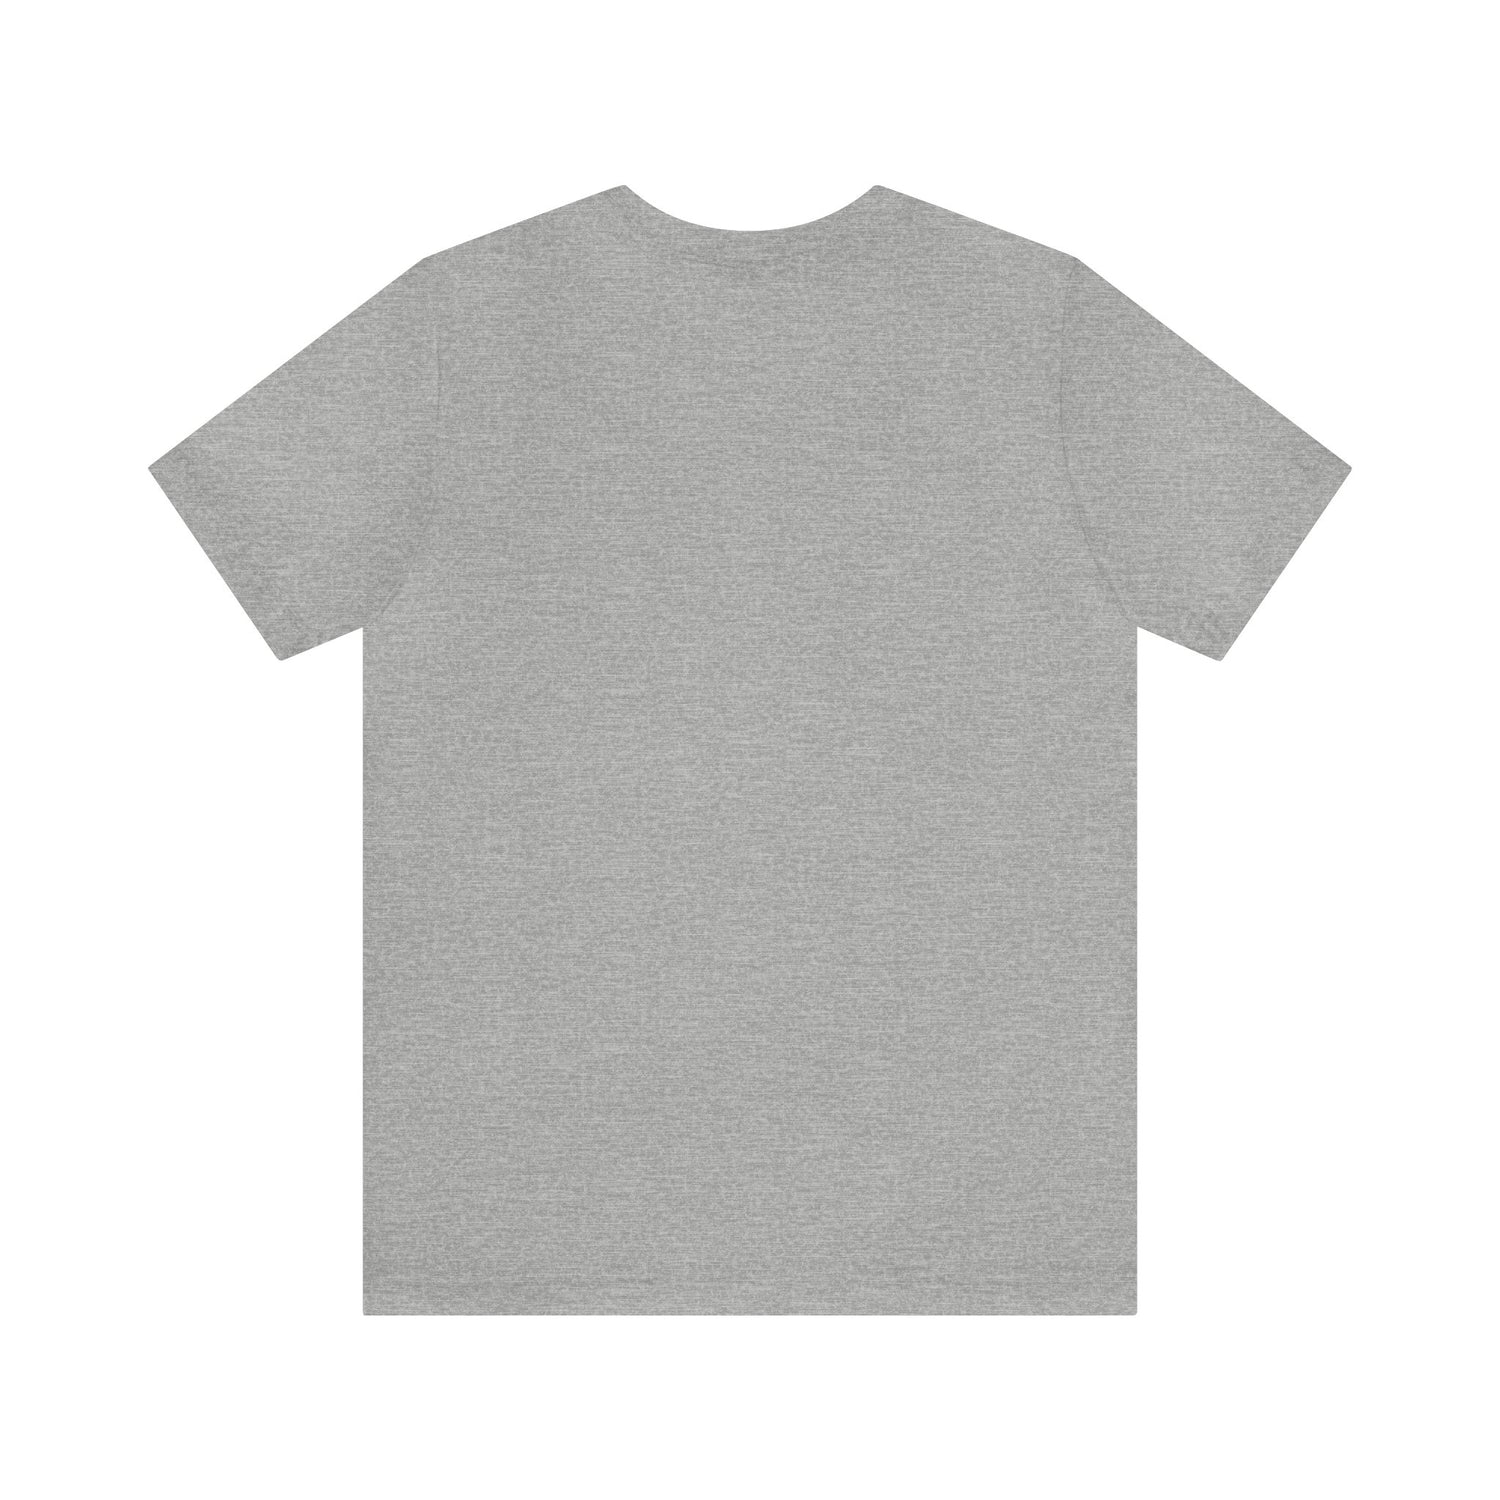 Cool Phrase T-Shirt T-Shirt Petrova Designs